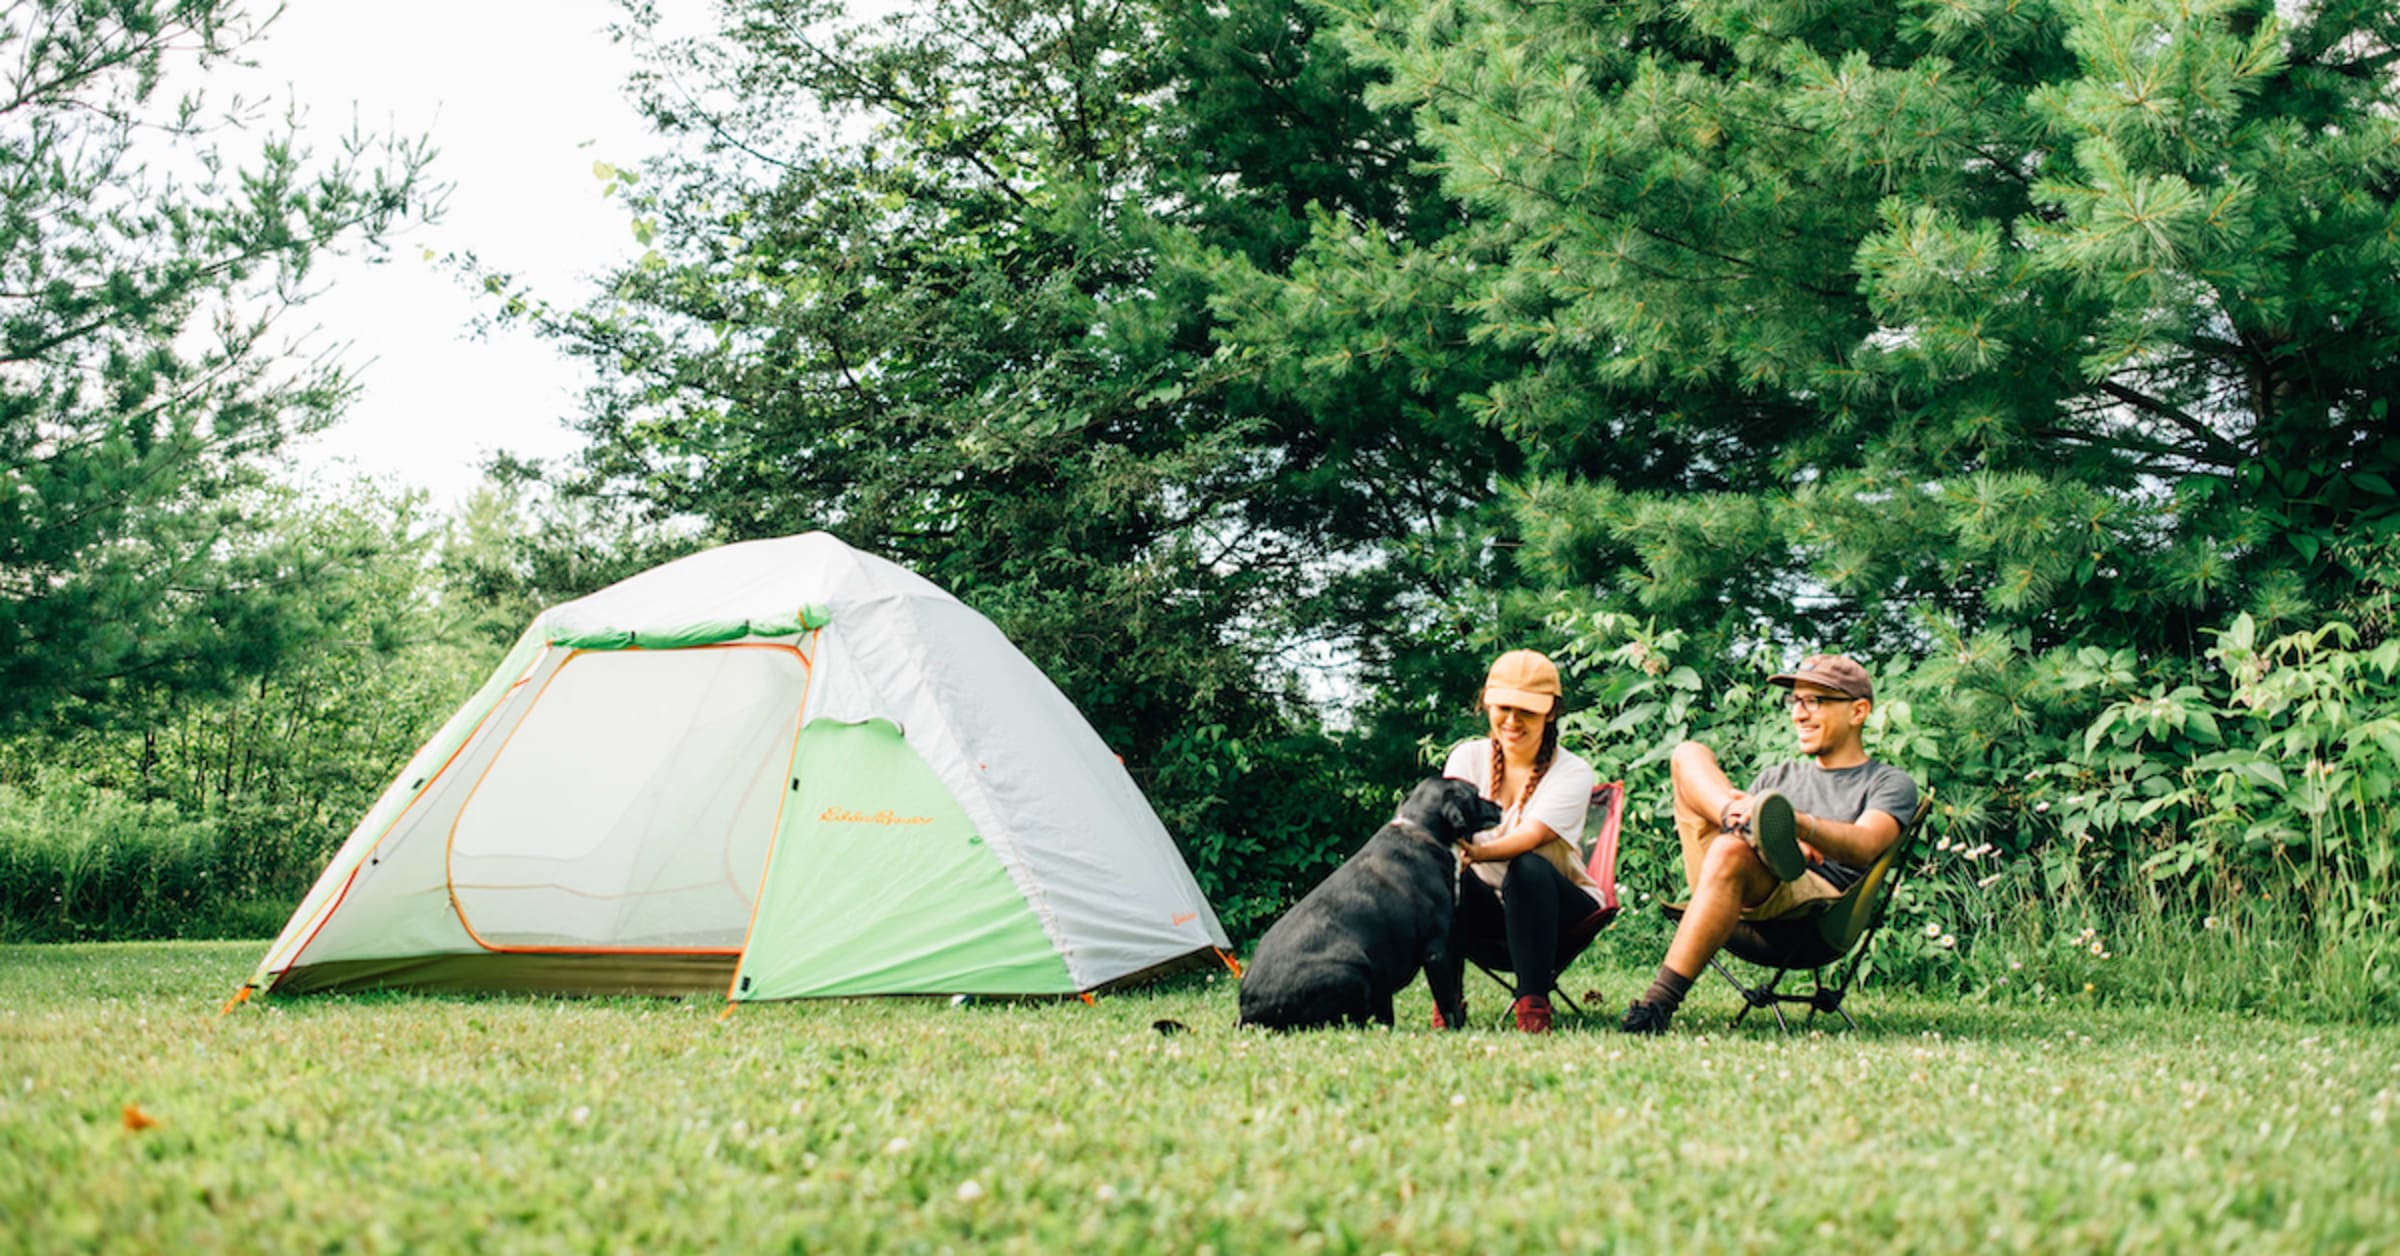 Benefits of hosting campers